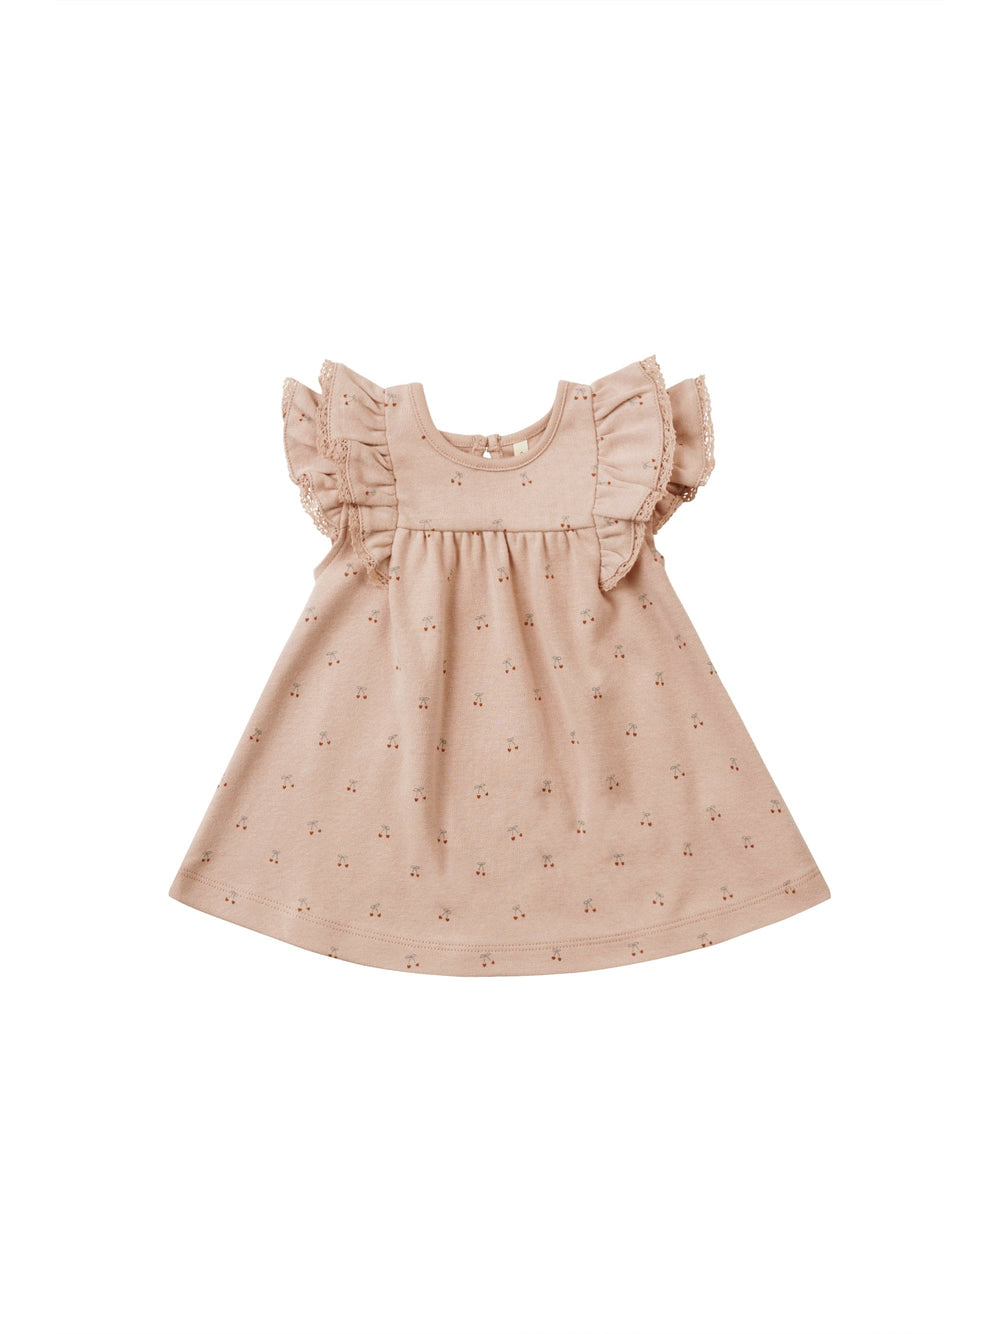 Quincy Mae Baby & Toddler Dresses Flutter Dress & Bloomer - Cherries